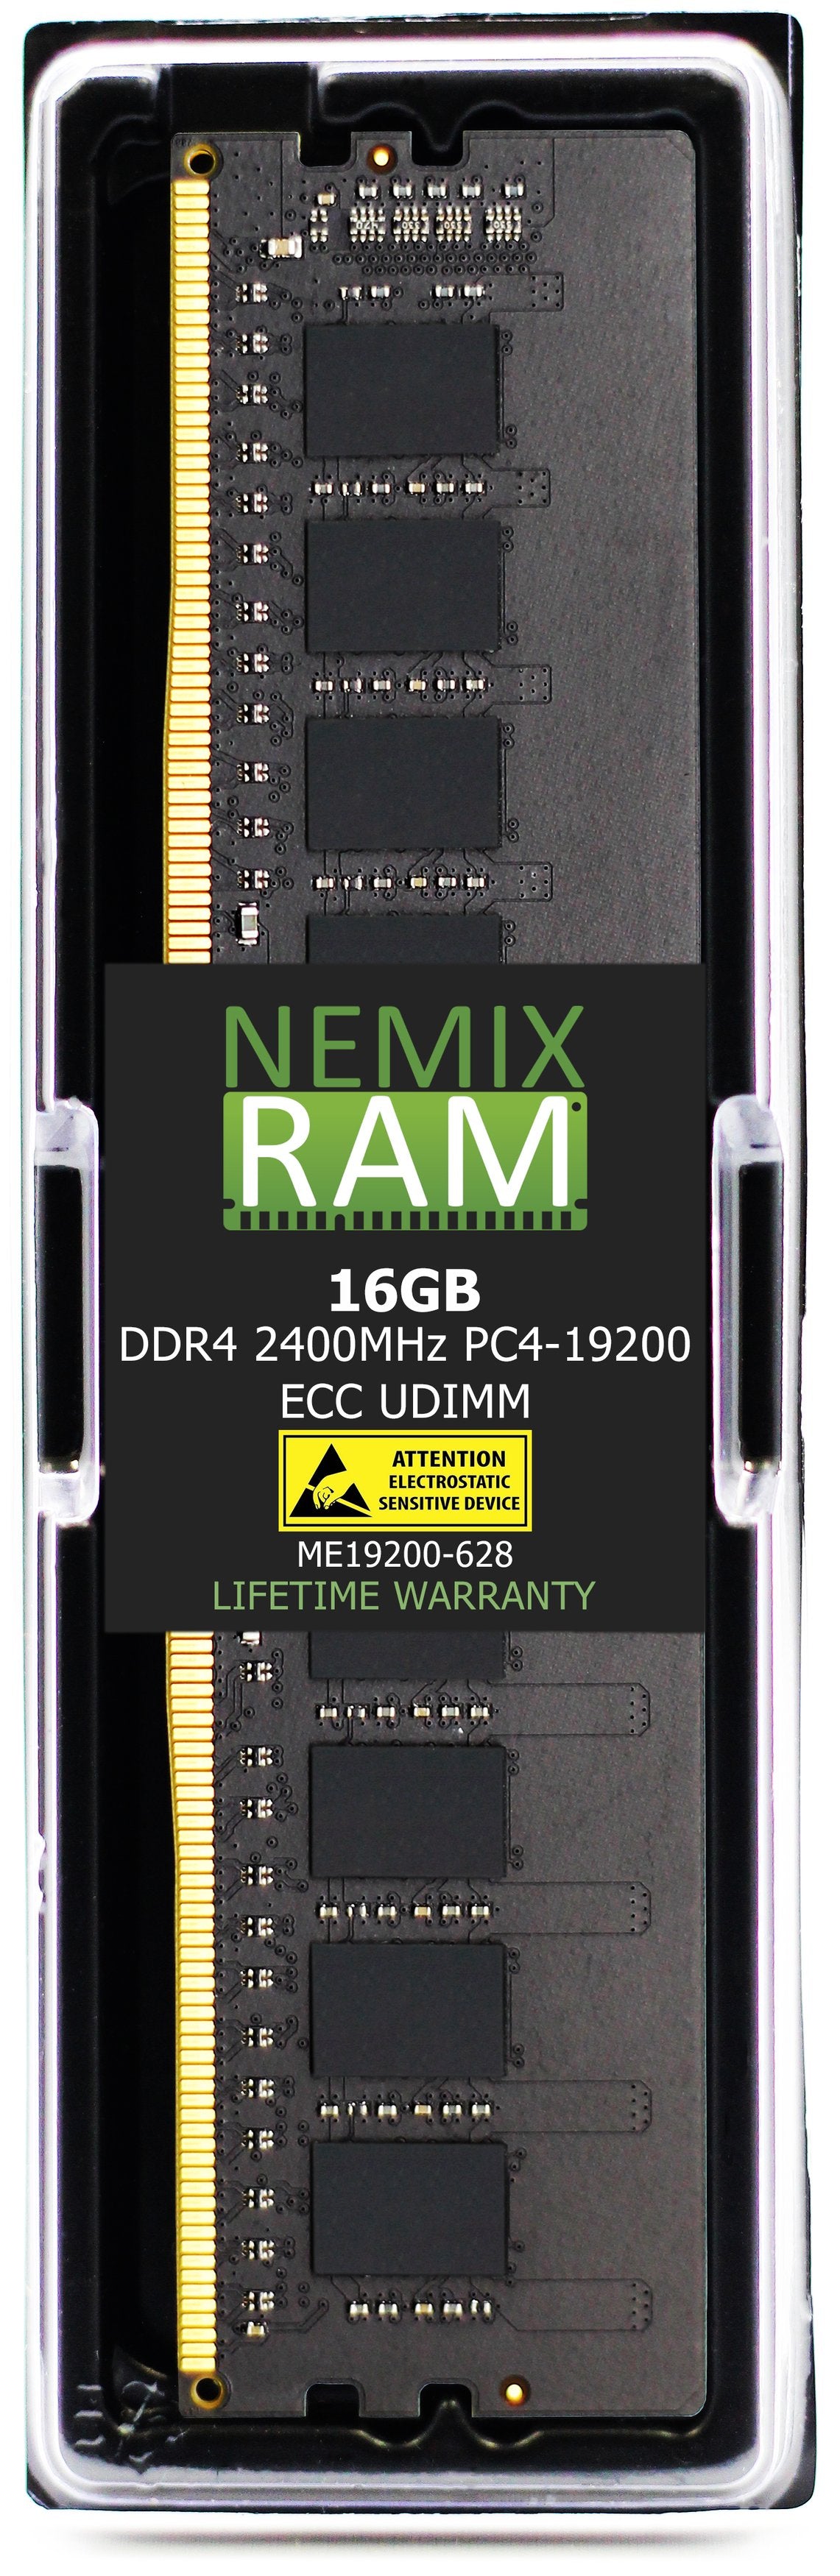 NEC Express5800 T110i Memory Module N8102-702F 16GB DDR4 2400MHZ PC4-19200 ECC UDIMM